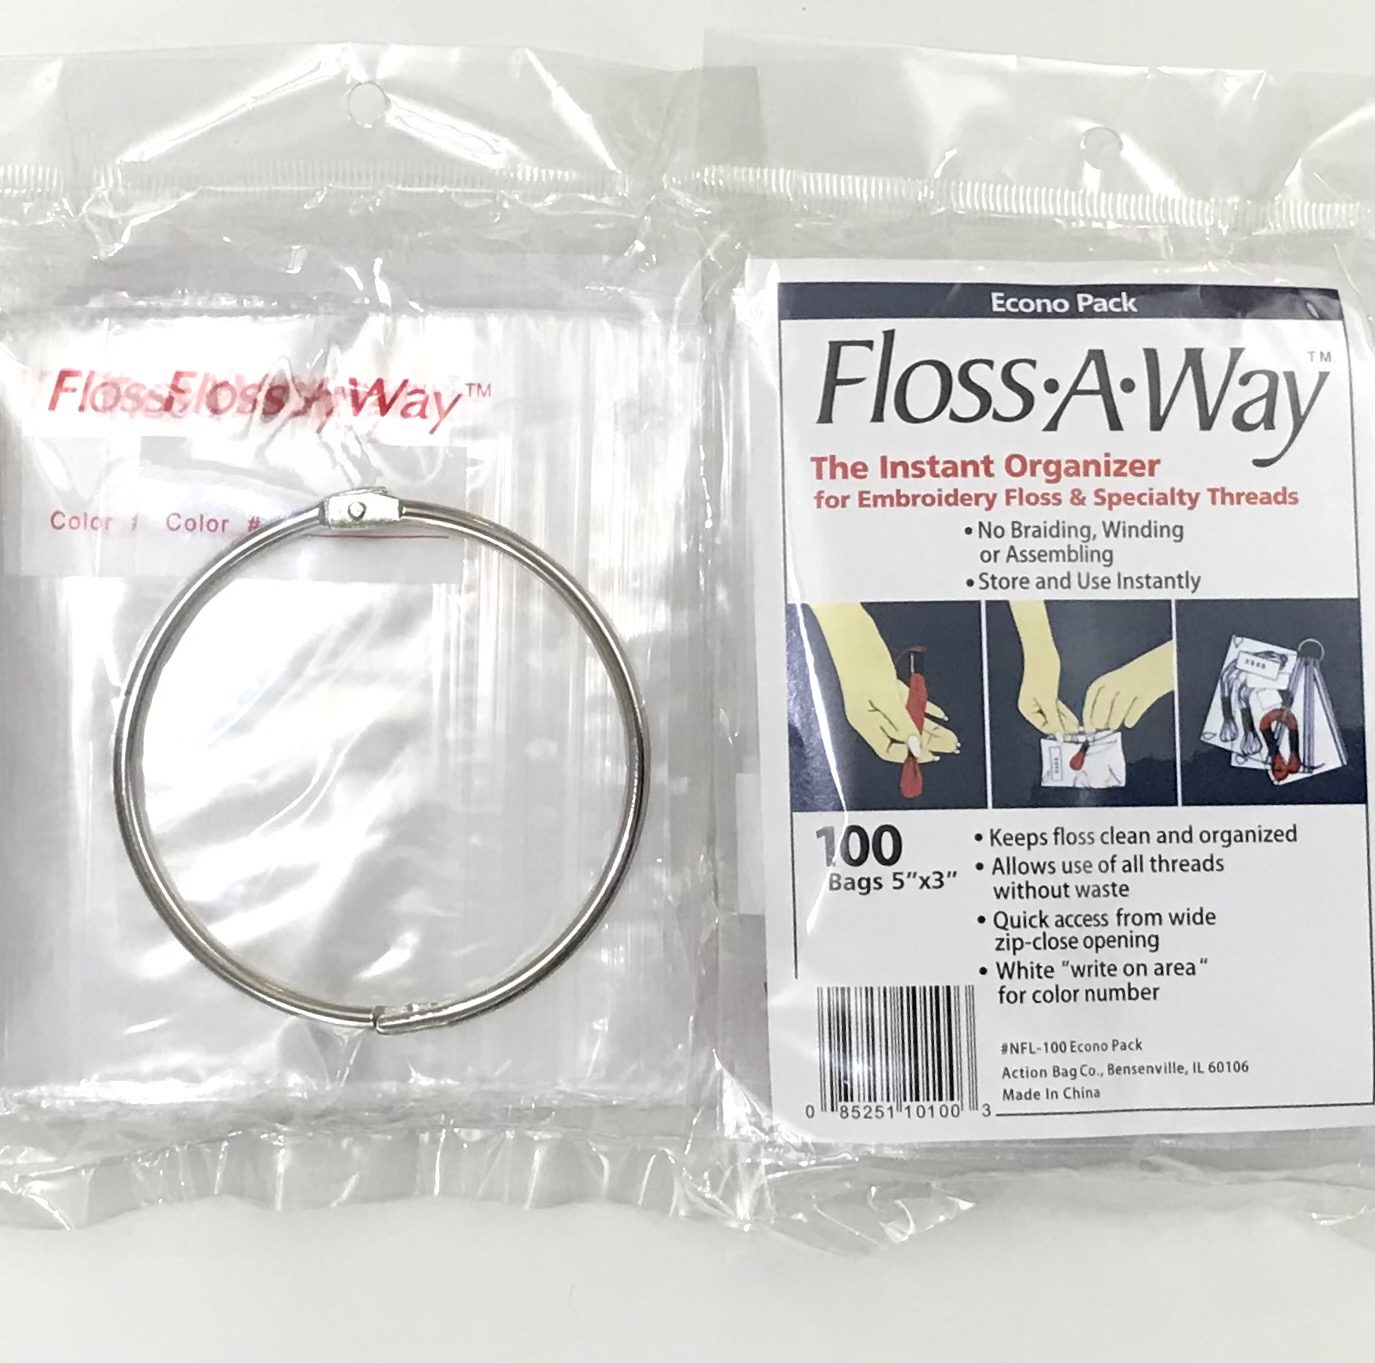 Floss-A-Way thread storage bags